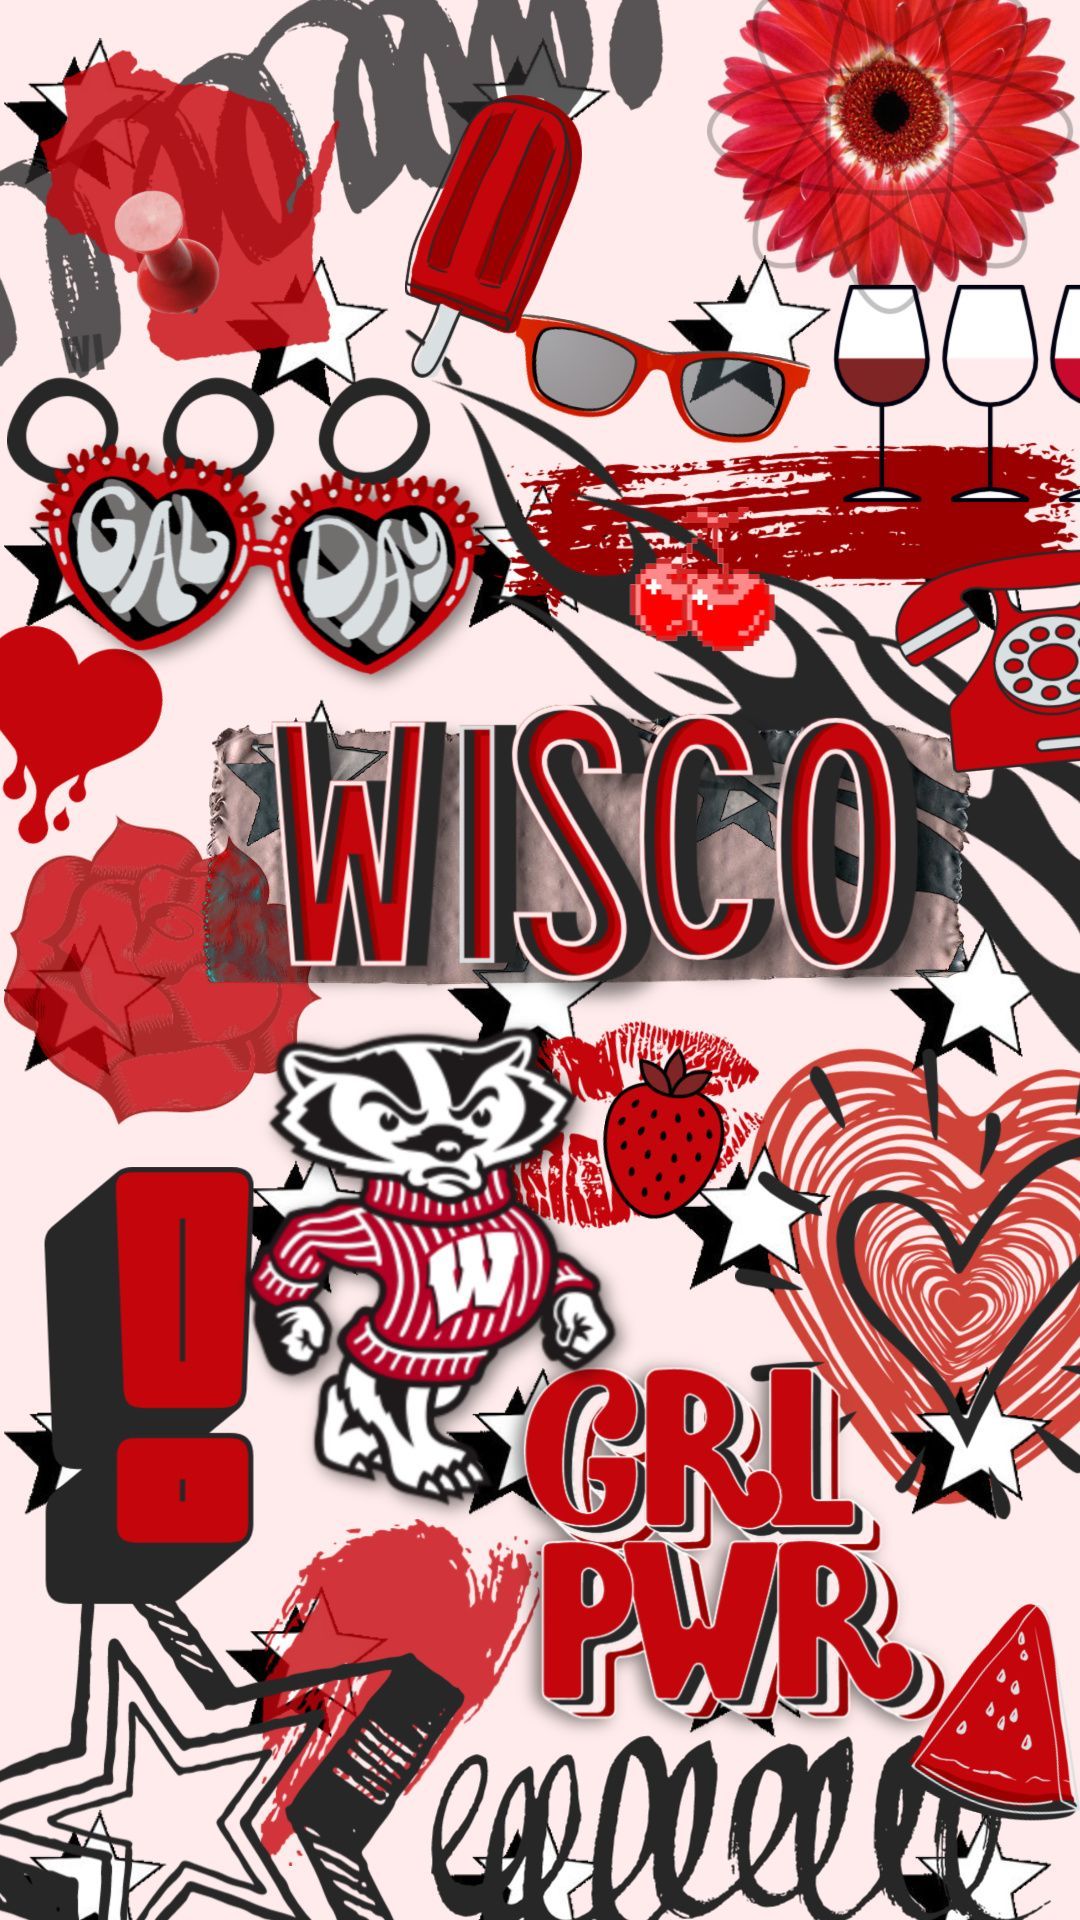 Wisconsin iPhone Wallpaper. Madison